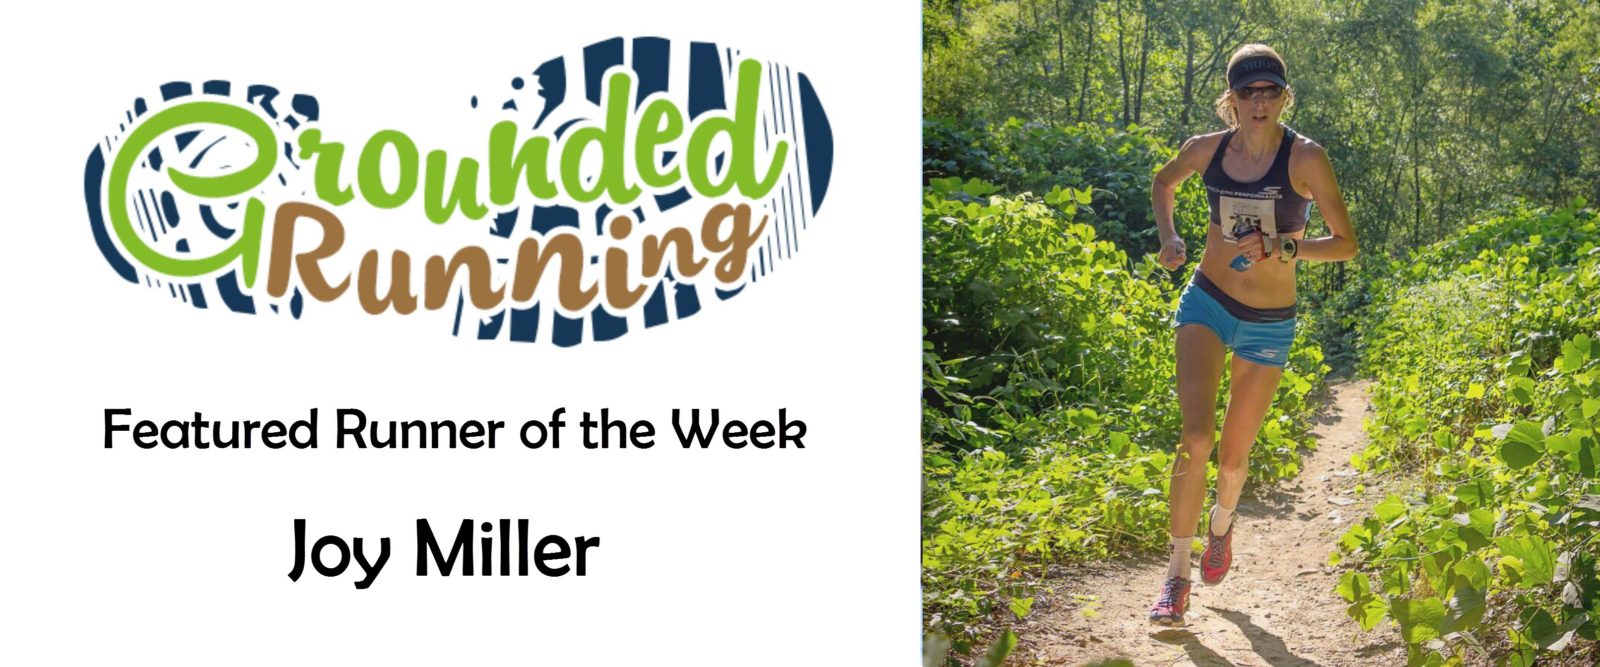 Joy Miller Featured Runner of the Week